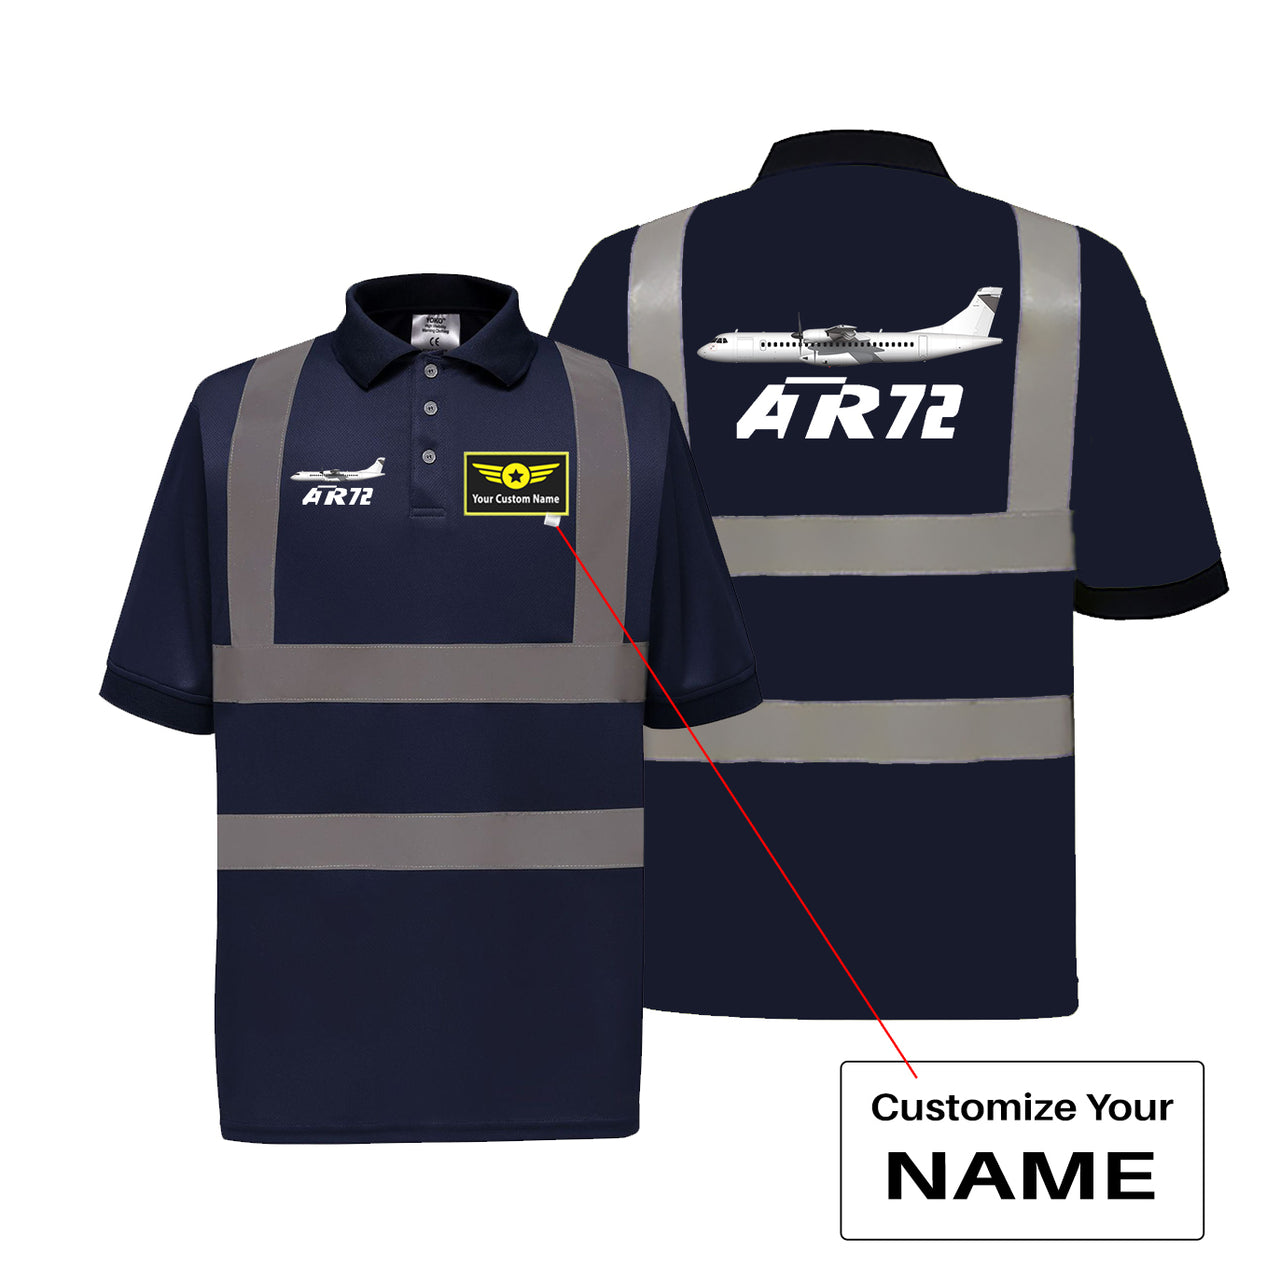 The ATR72 Designed Reflective Polo T-Shirts